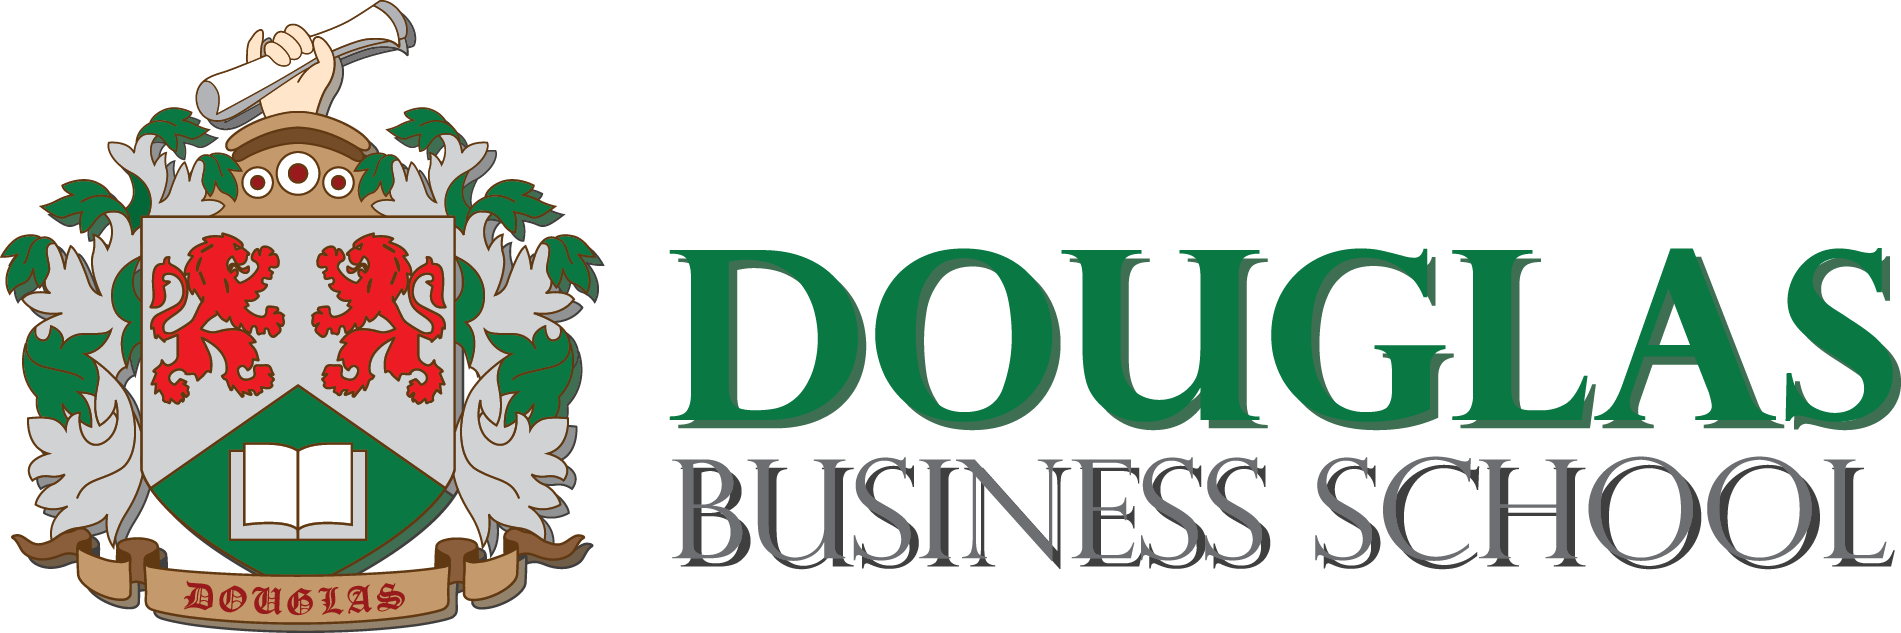 Douglas Business School Logo